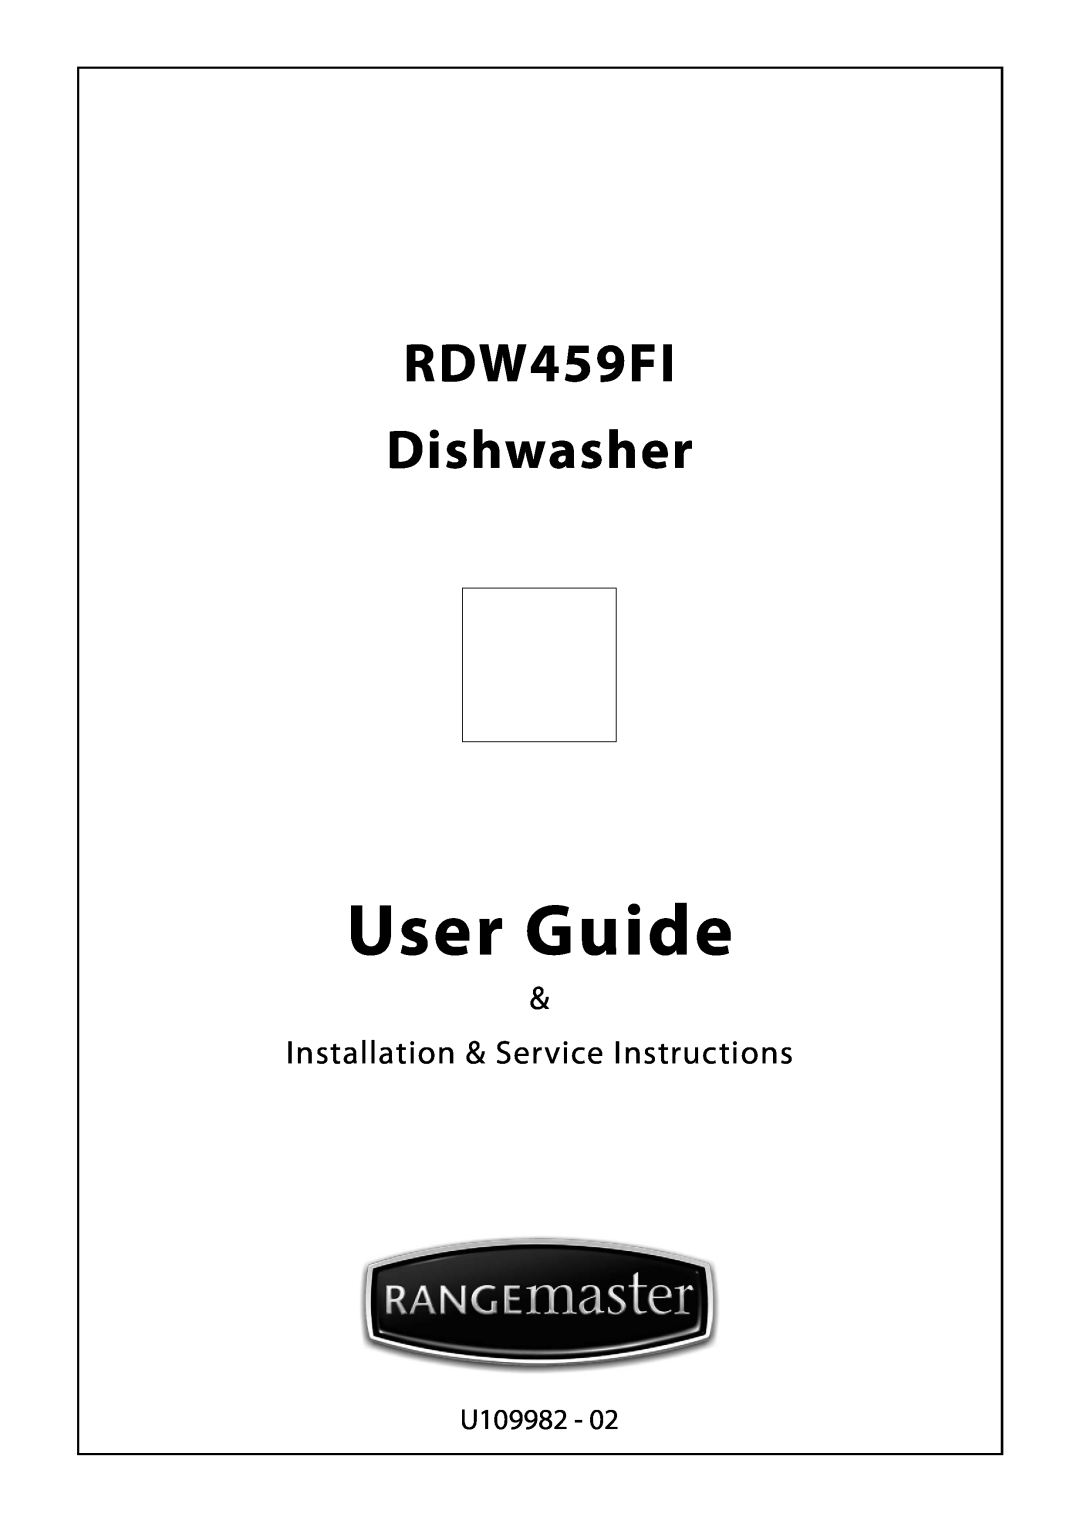 Rangemaster RDW945FI manual User Guide, RDW459FI Dishwasher, Installation & Service Instructions, U109982 